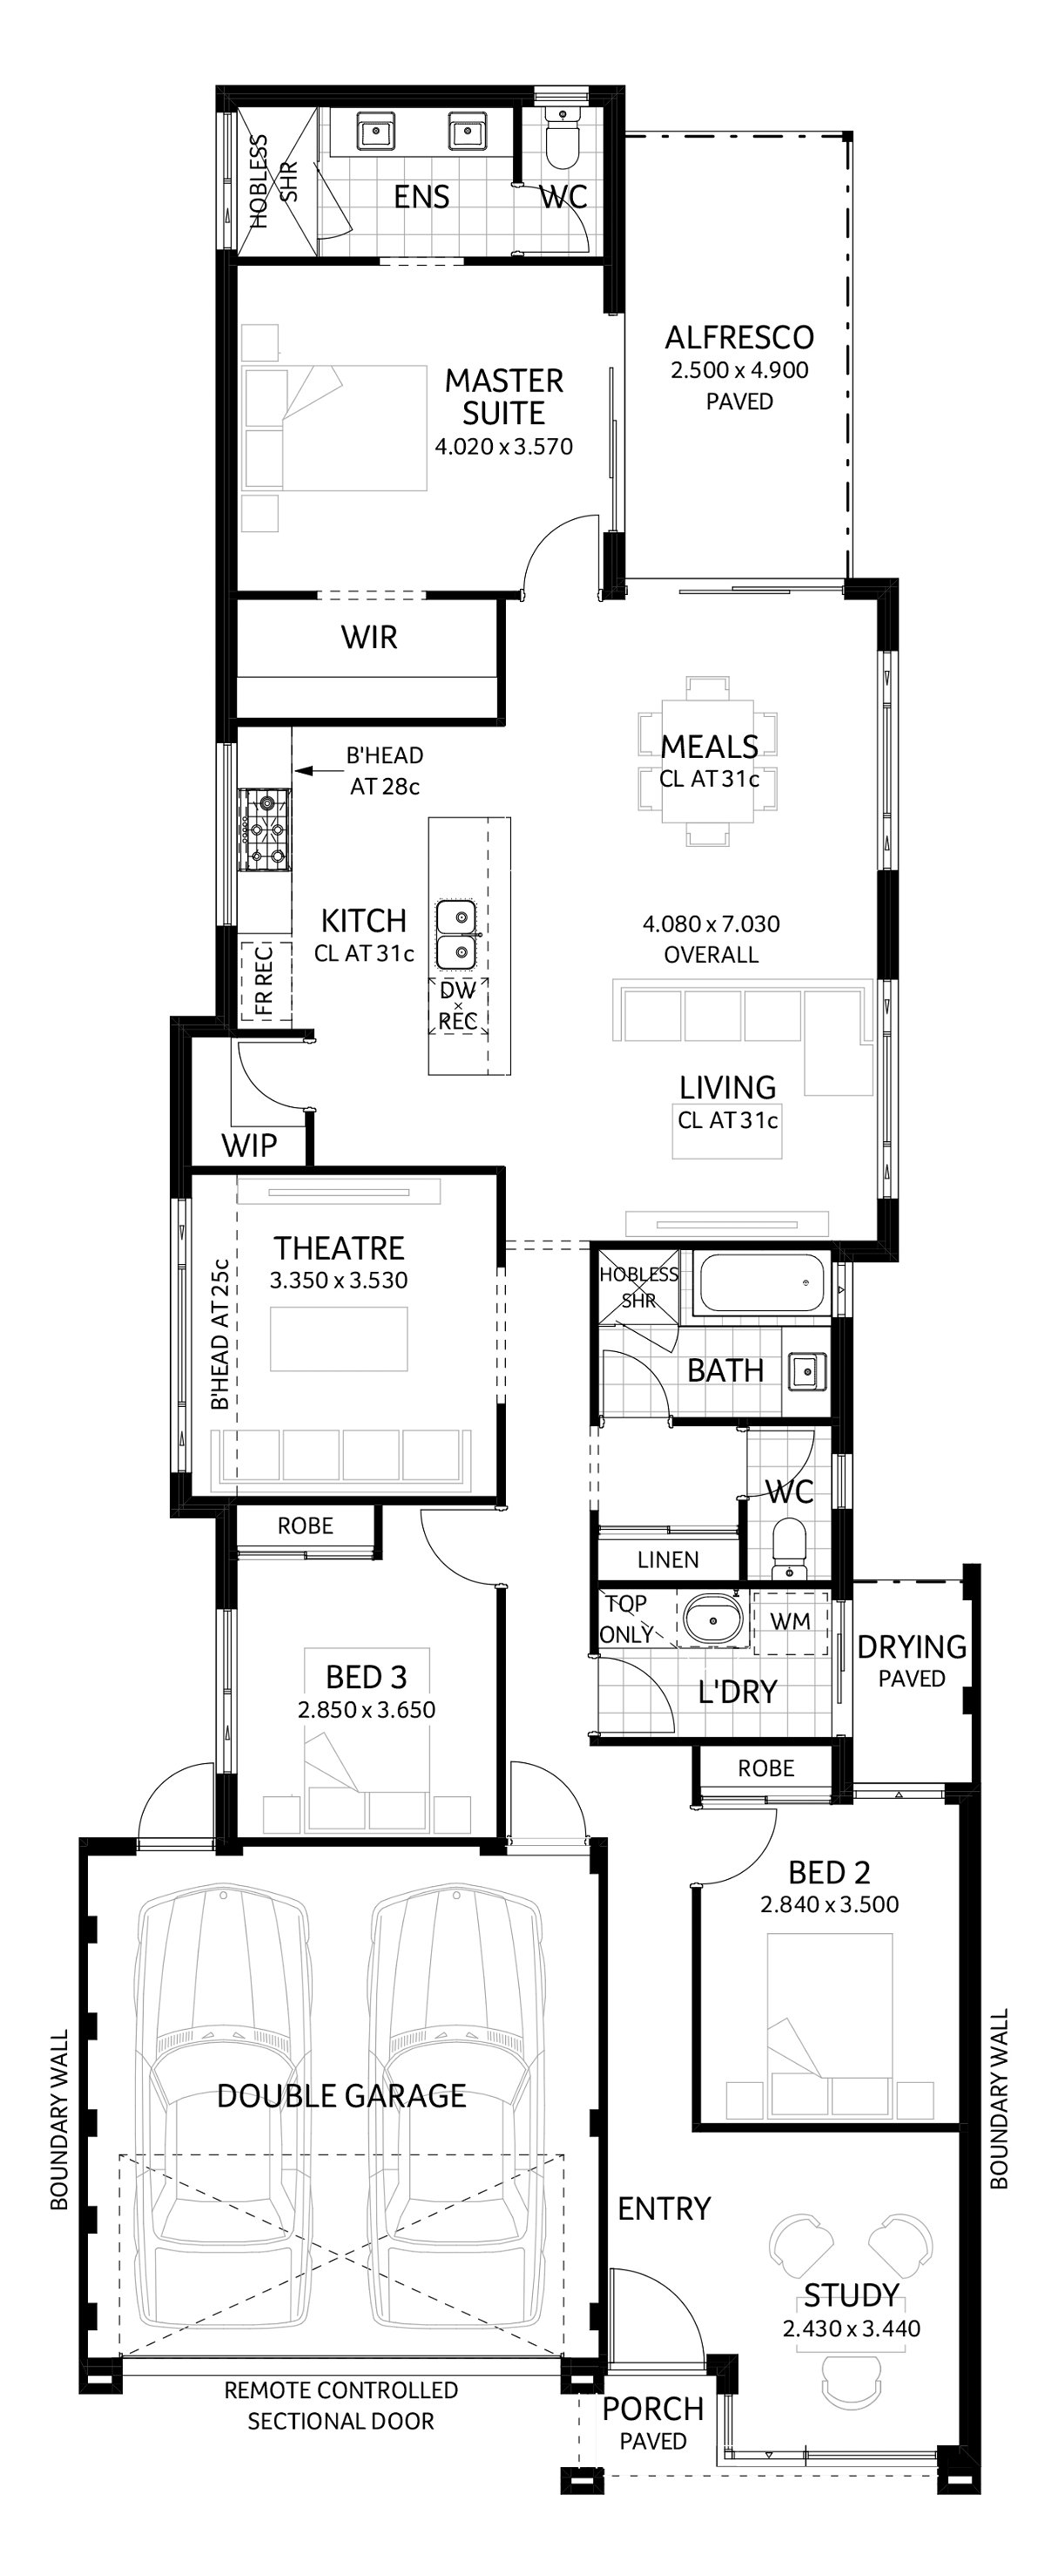 Plunkett Homes - York | Mid-Century - Floorplan - York Luxe Mid Century Marketing Plan Croppedjpg